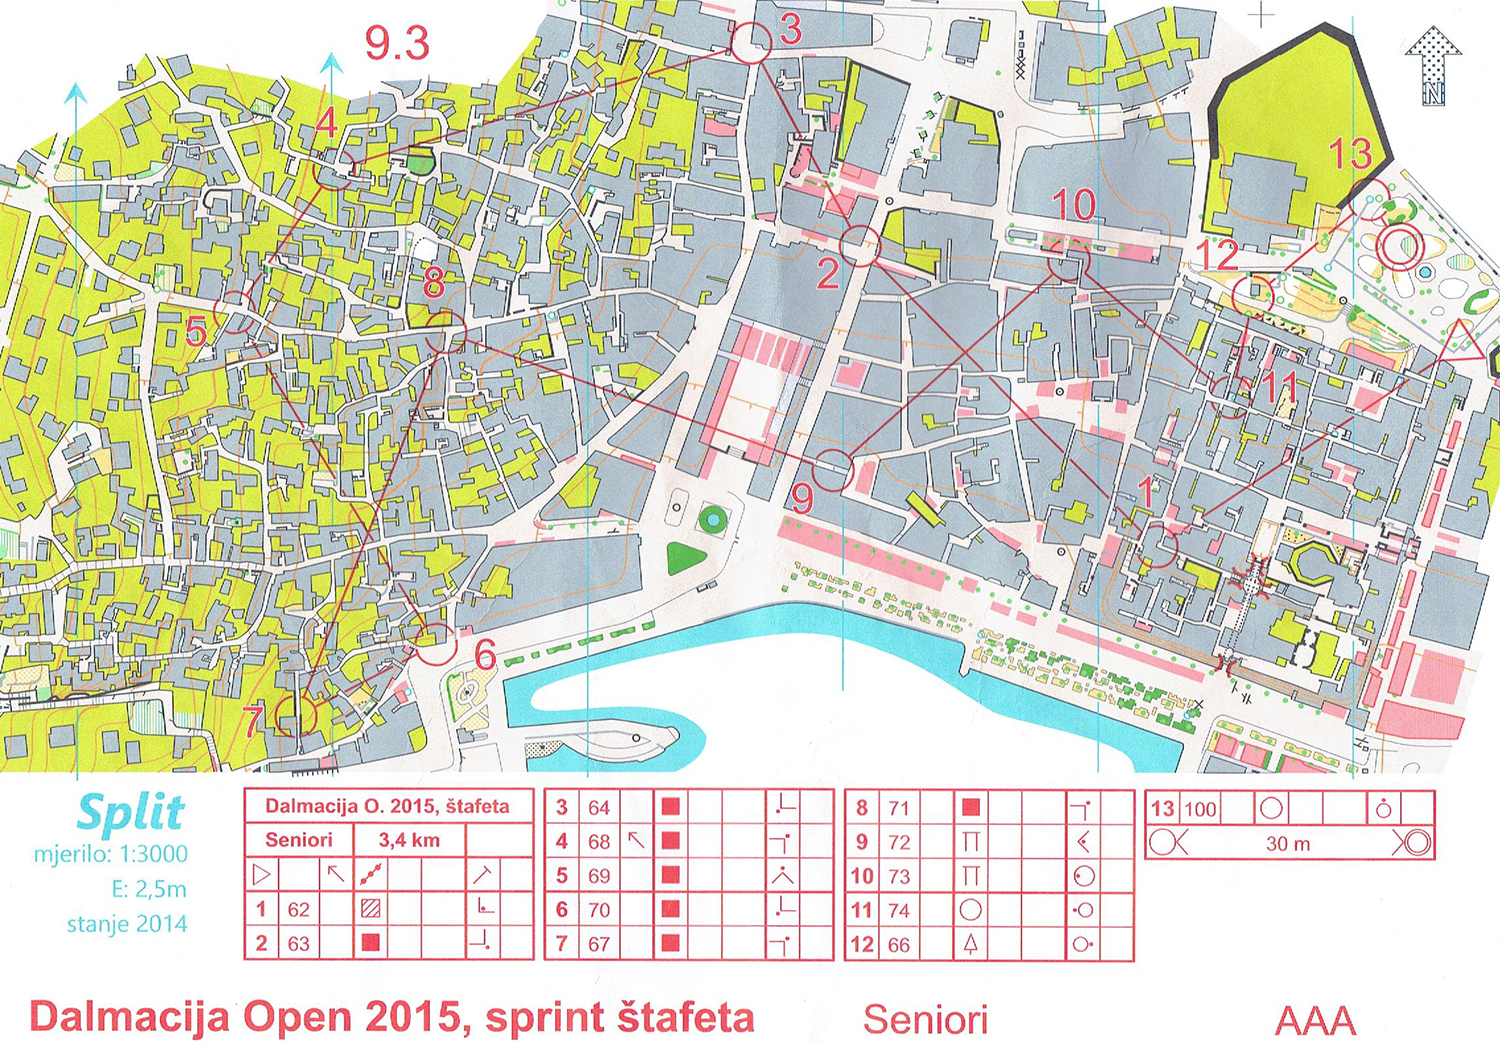 Dalmacija open - mixed sprint relay (10-10-2015)